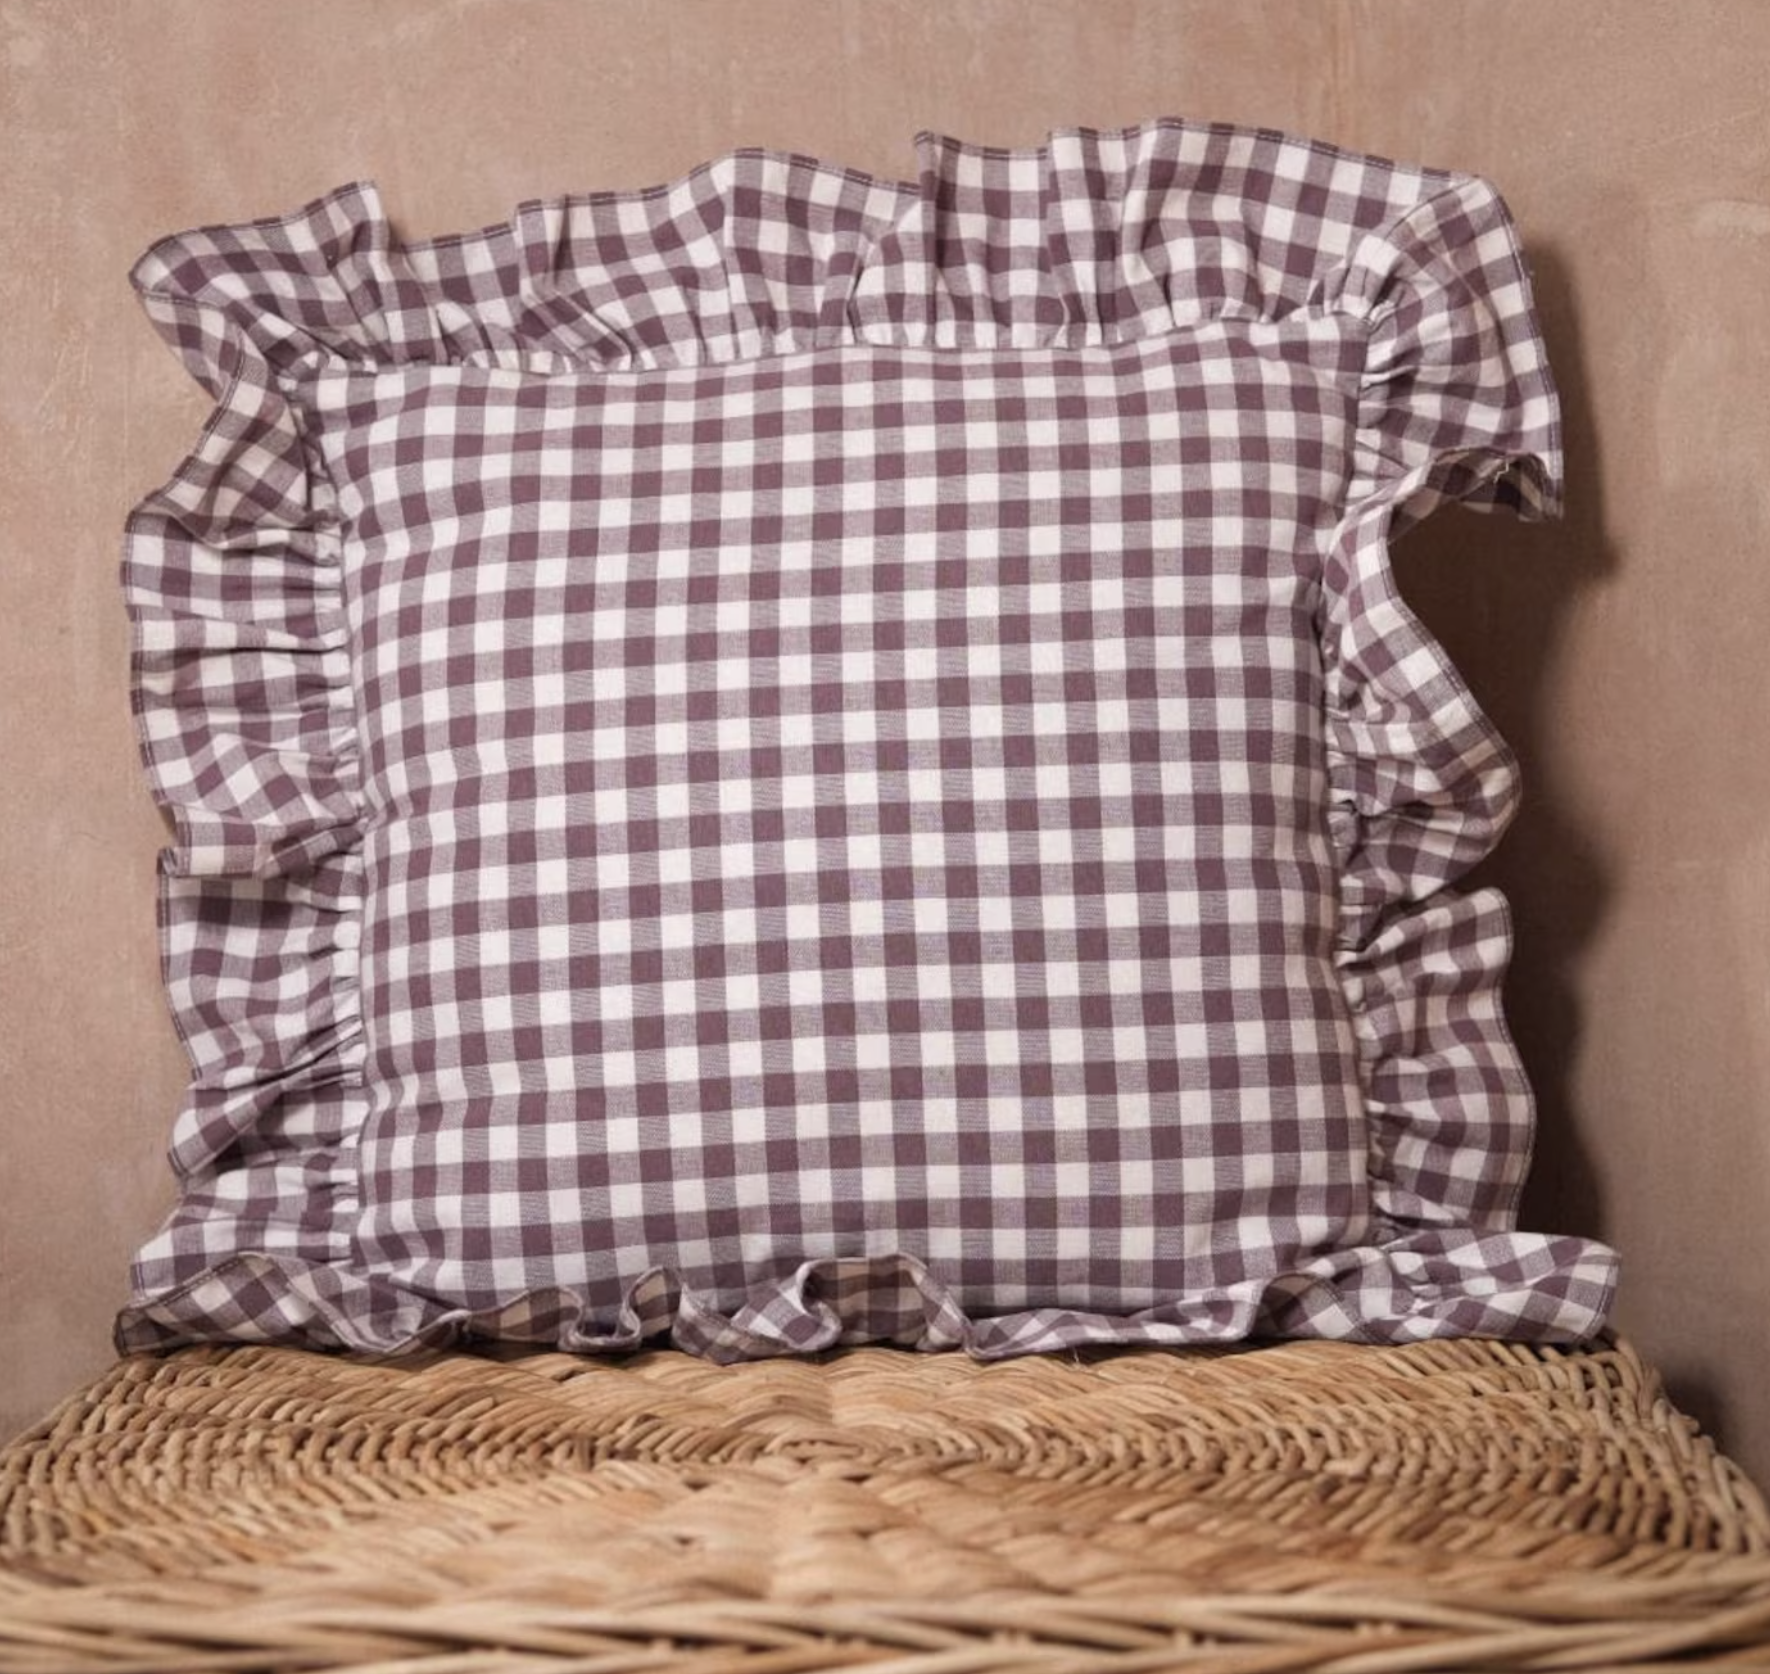 Plum Cushion - Fabric Snug, £32.99